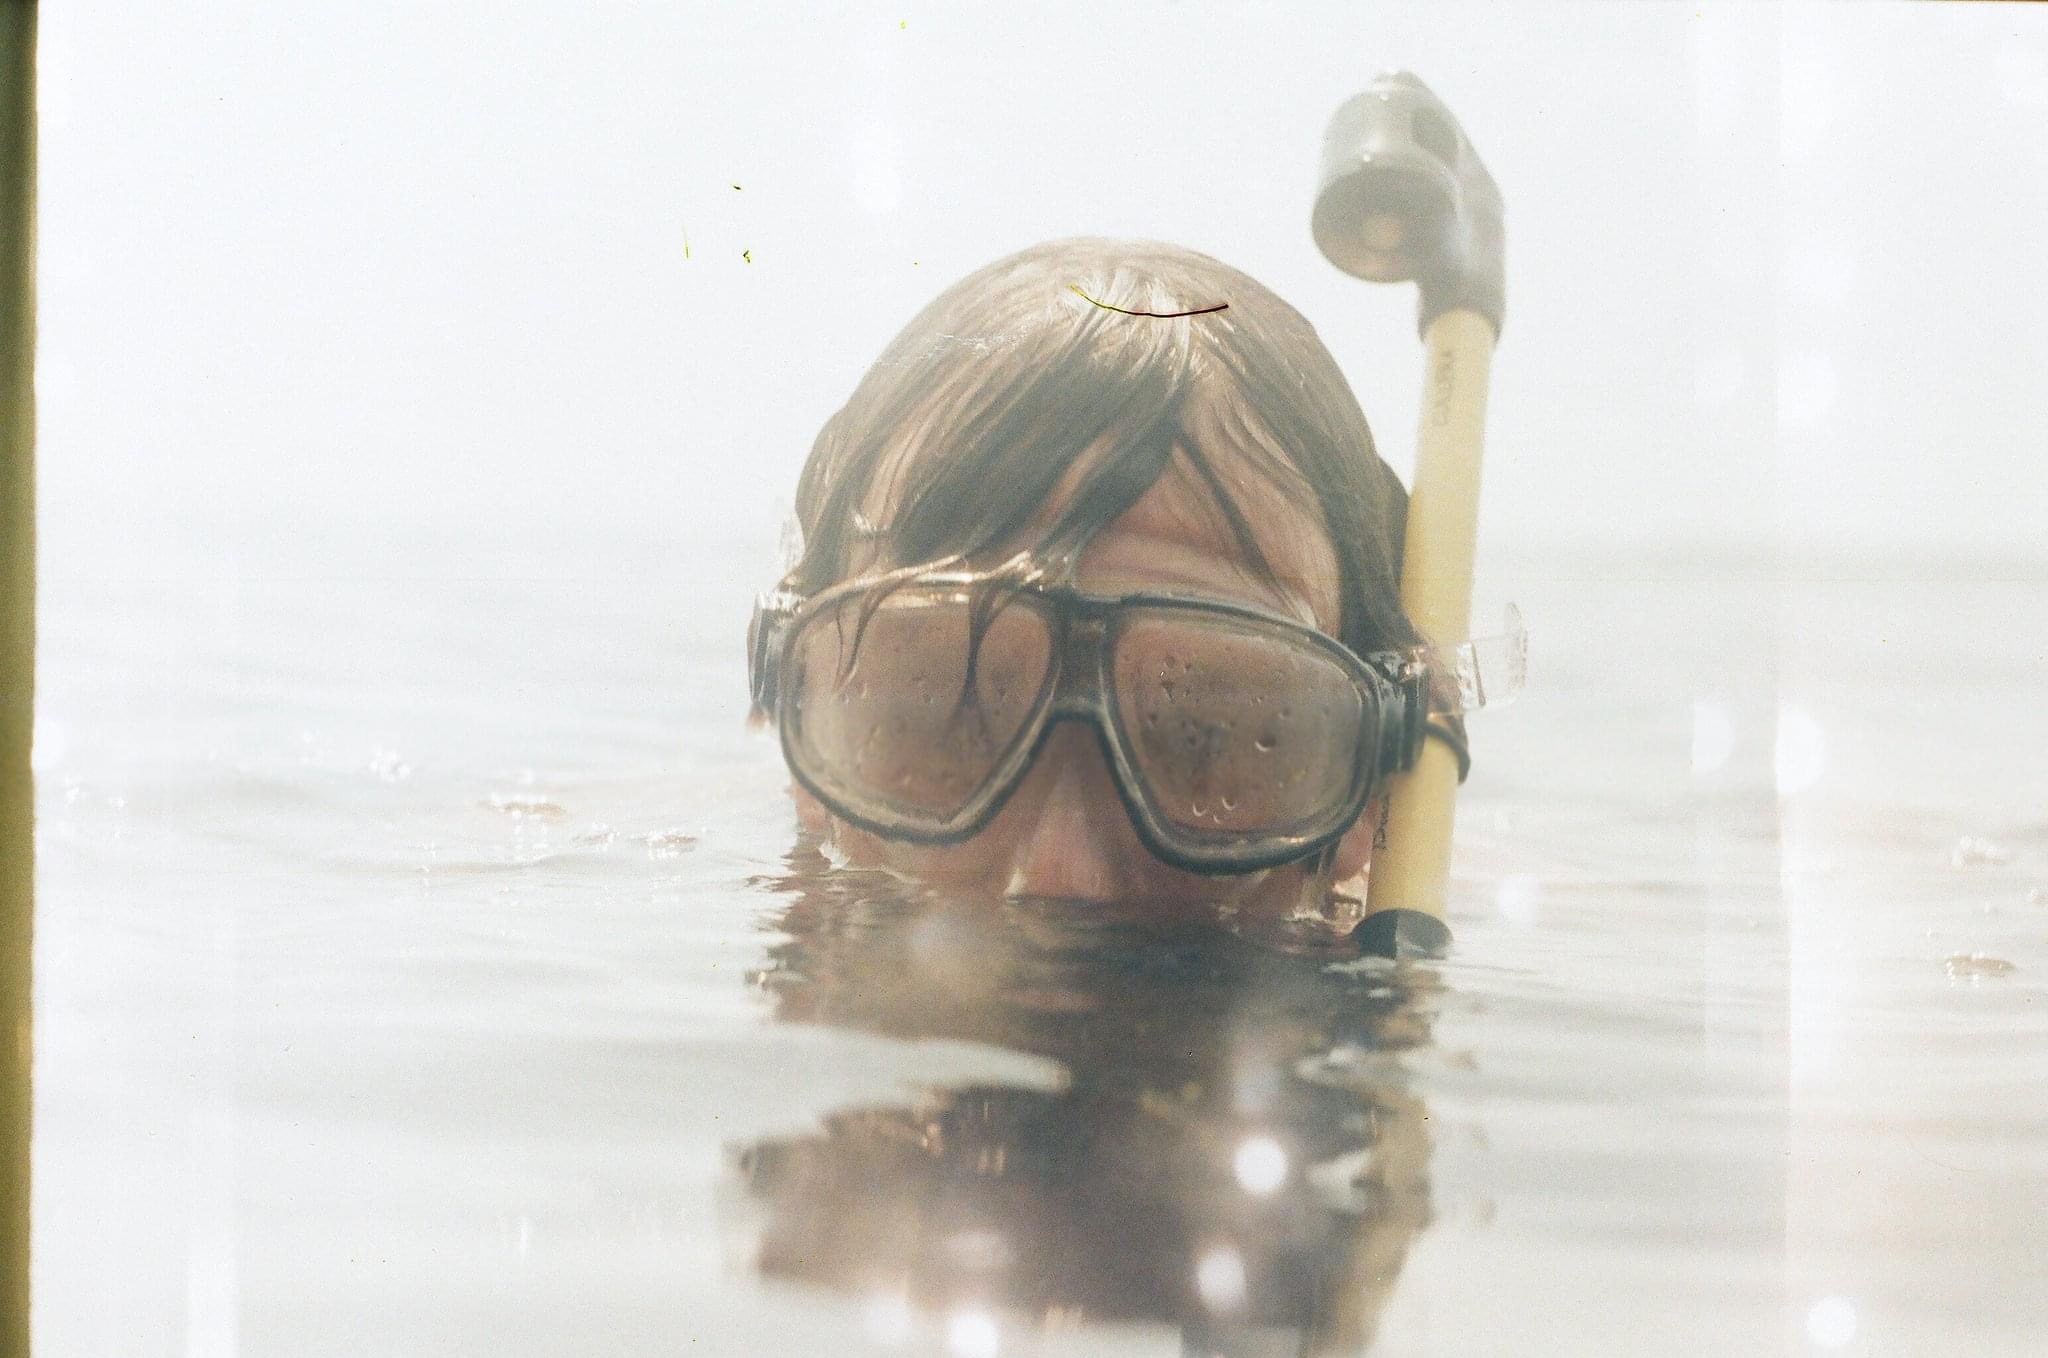 Vladimir Karpov (a.k.a X.Y.R.) Soundtracks Shimmering Mysteries of Underwater Life on Tenth Album